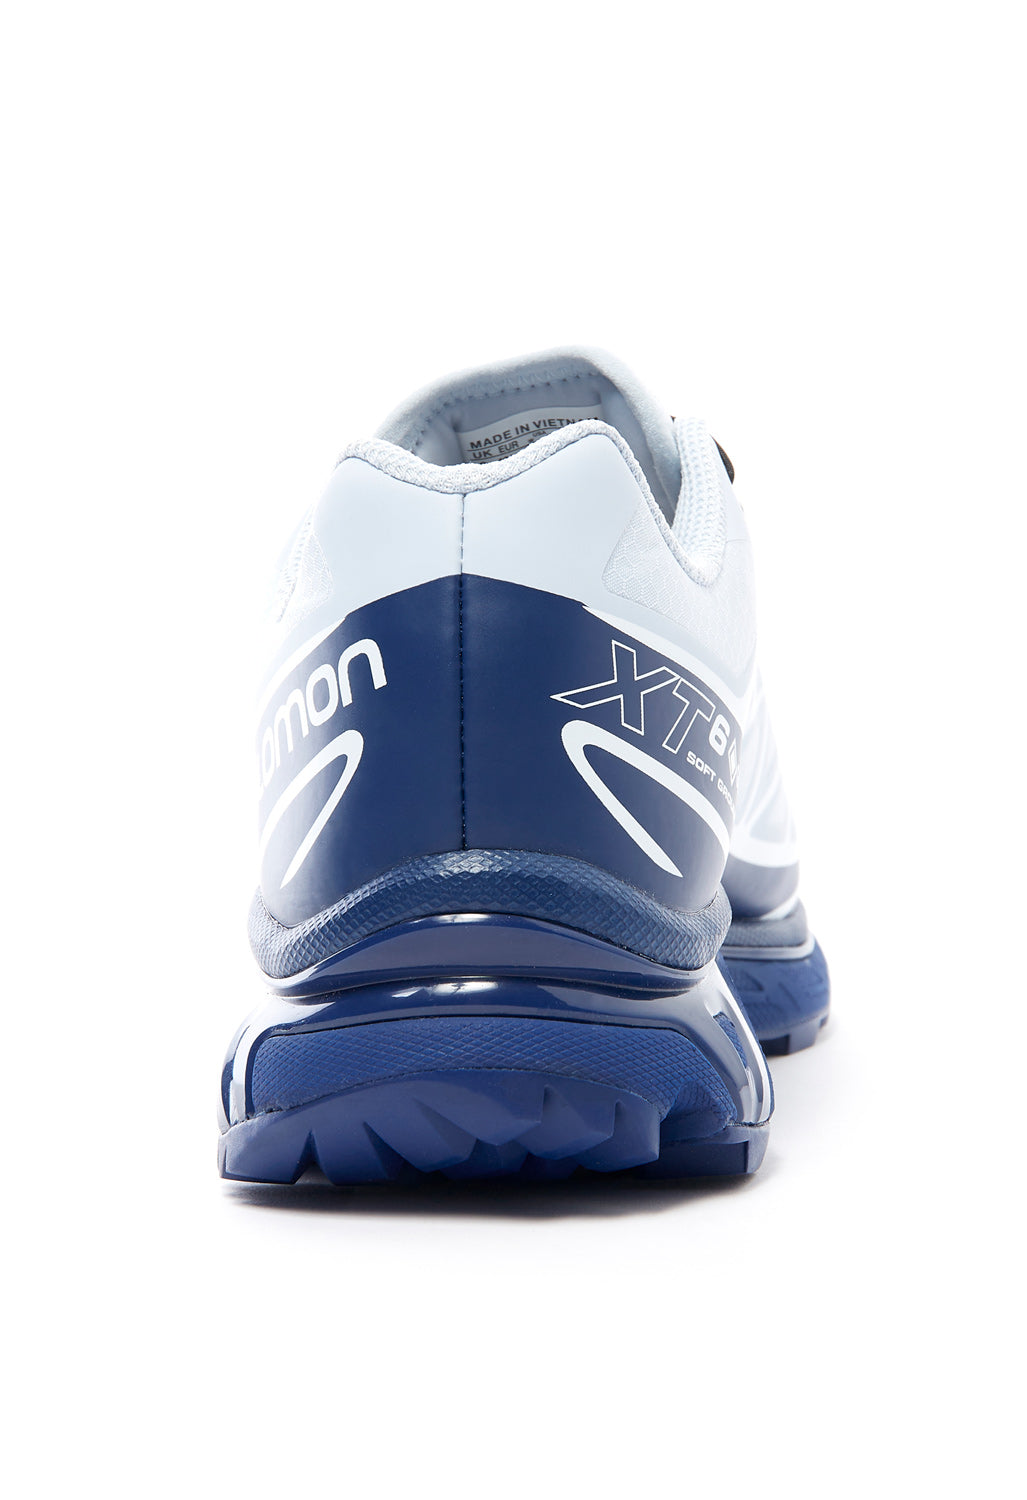 Salomon XT-6 GORE-TEX Shoes - Blue Print / Heather / White